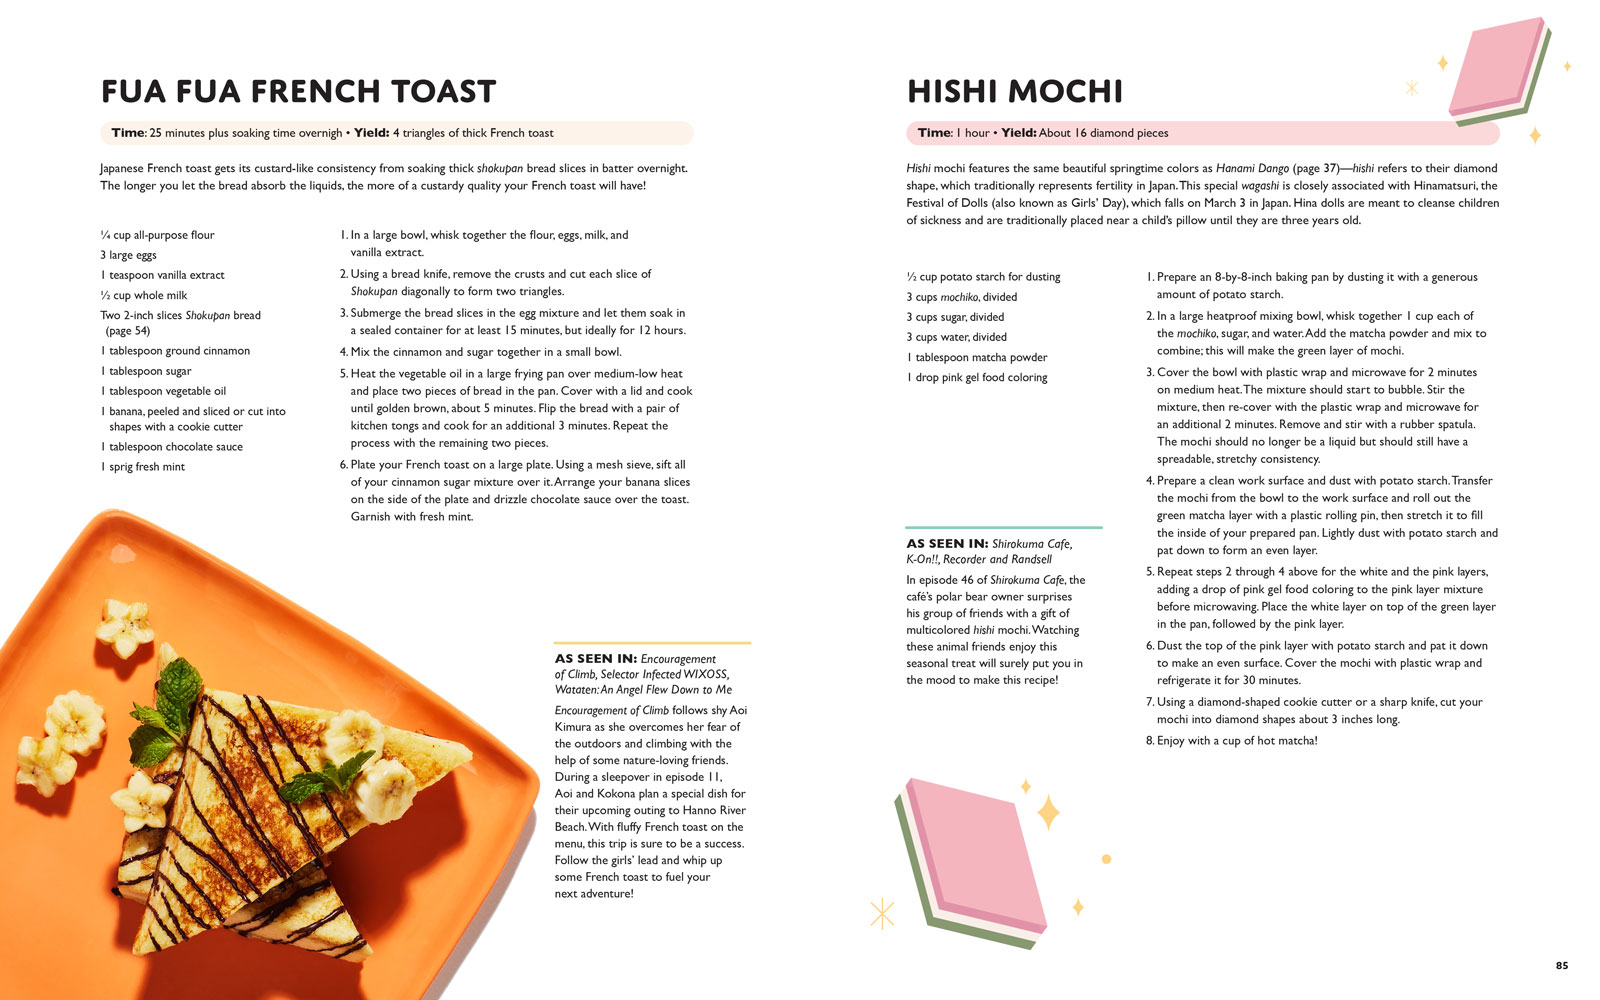 Oishisou!! The Ultimate Anime Dessert Cookbook